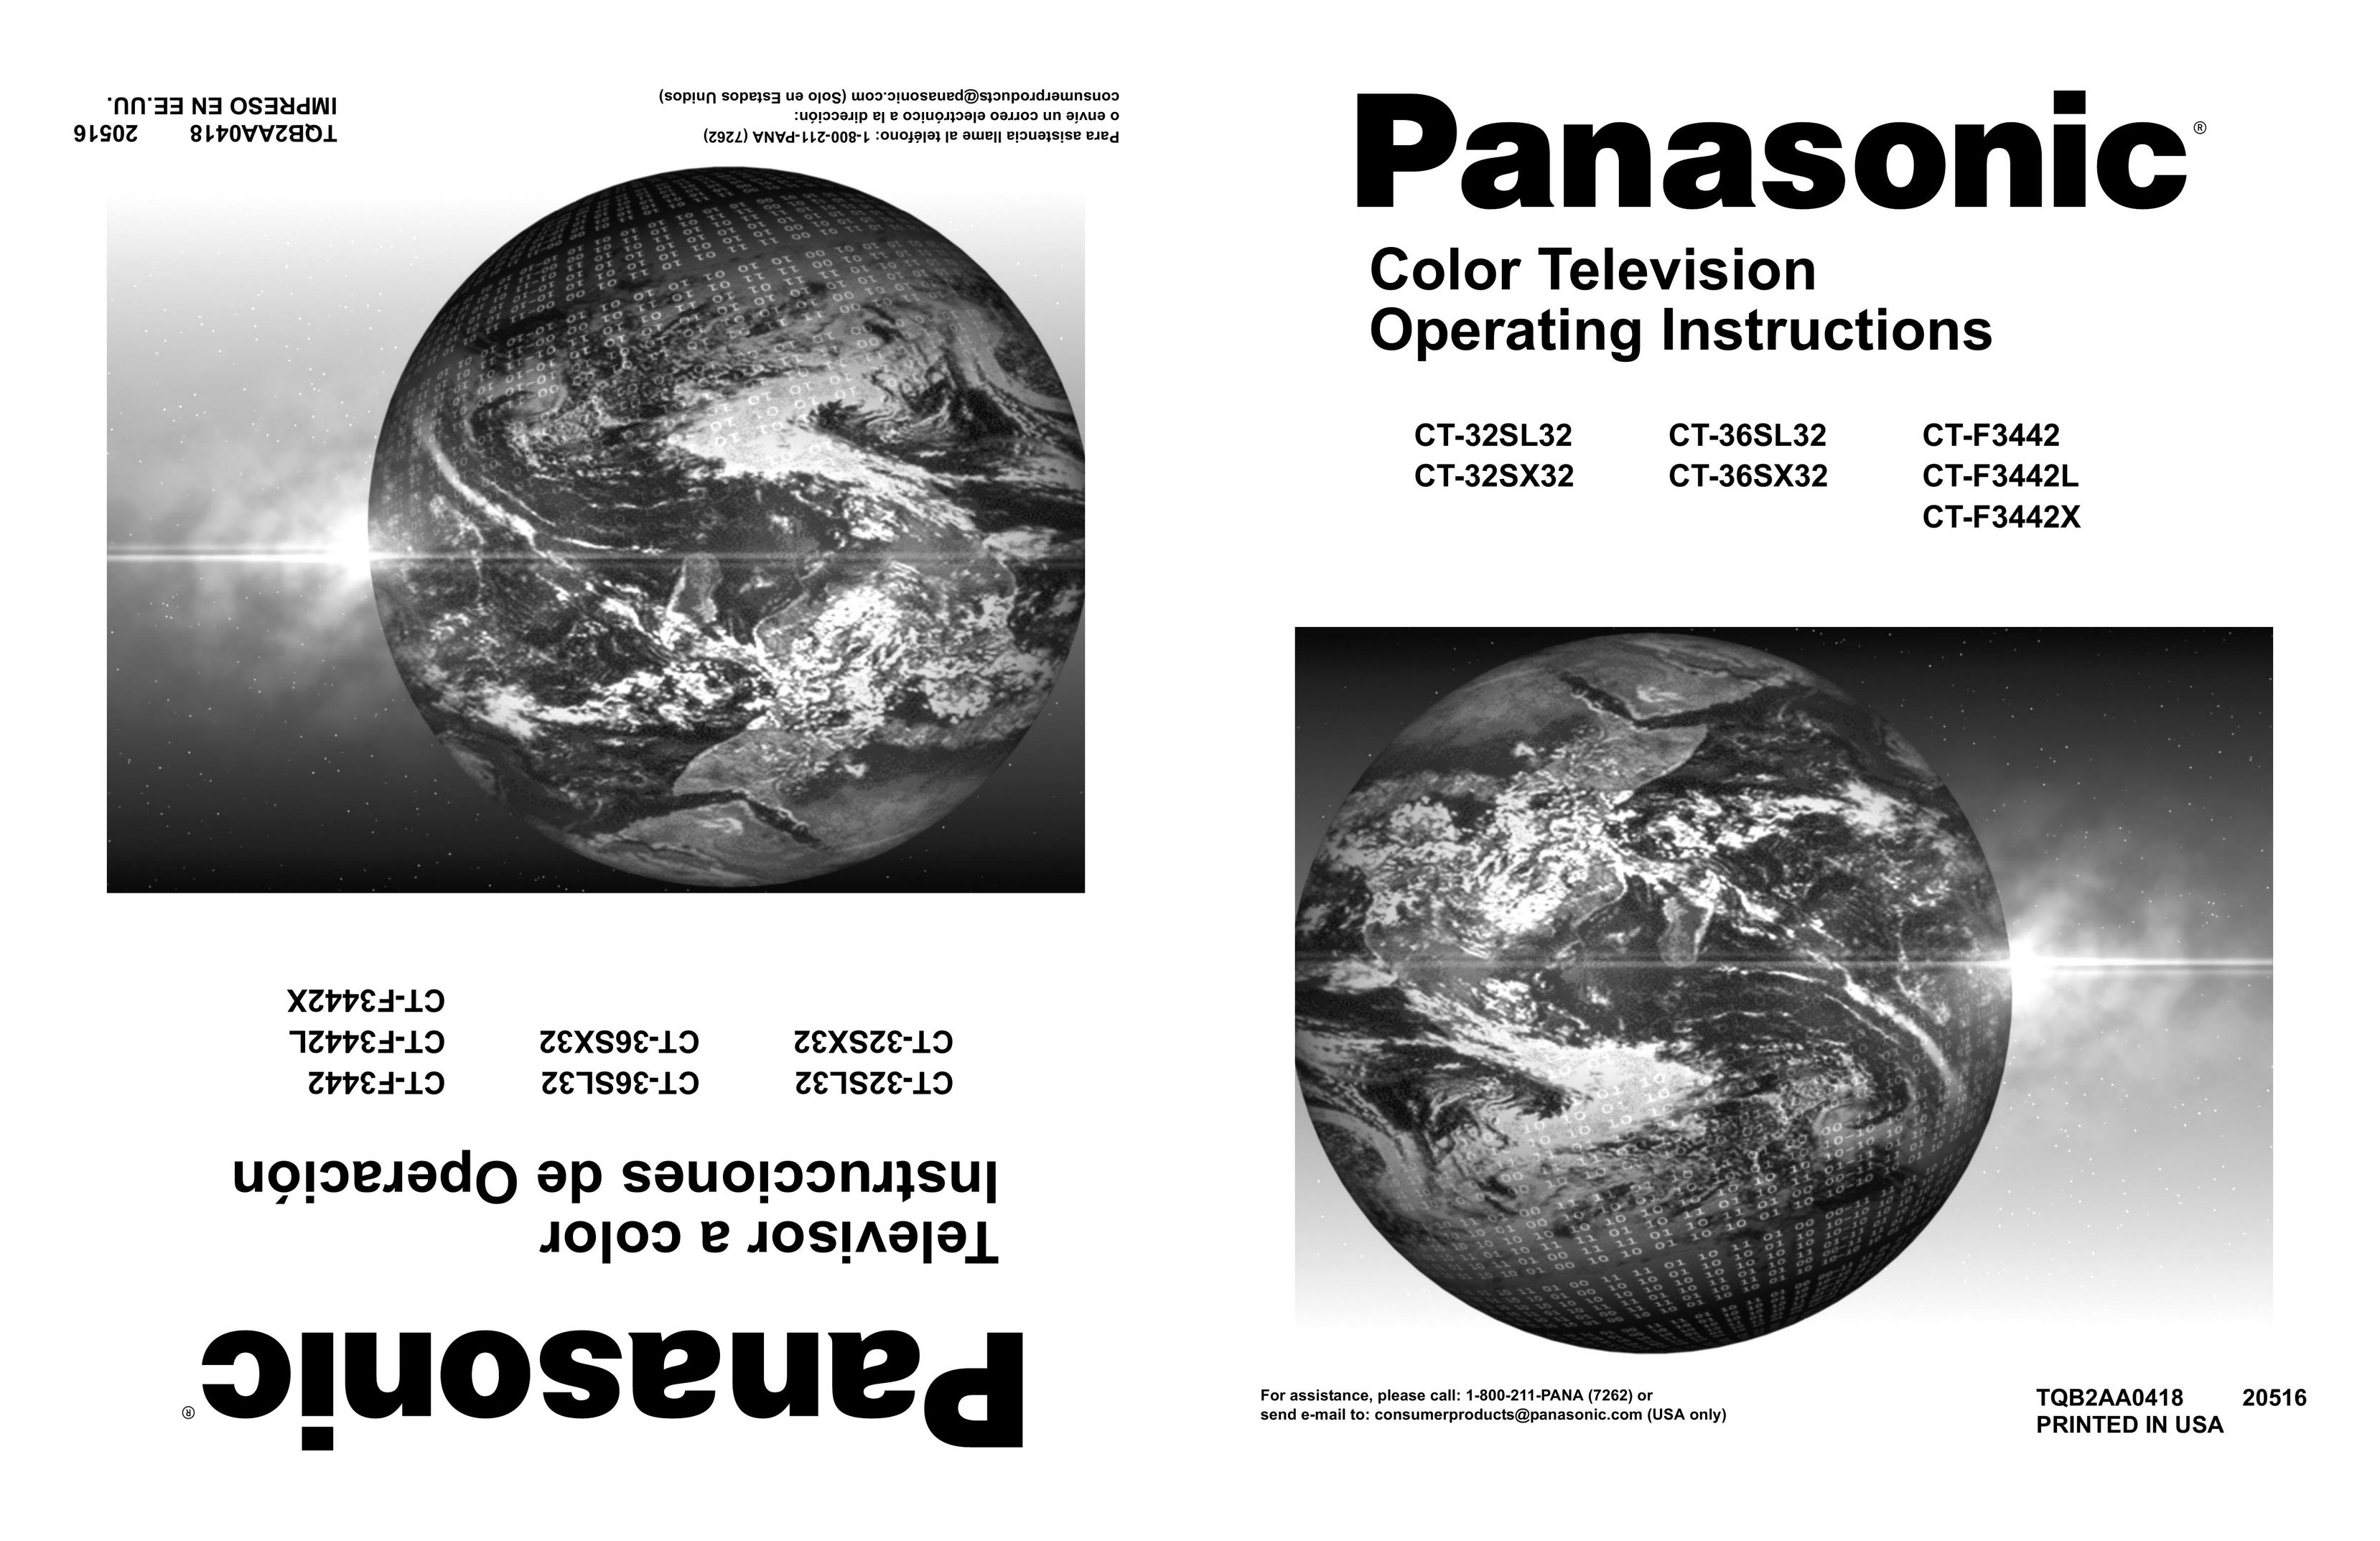 Panasonic CT-F3442 Flat Panel Television User Manual